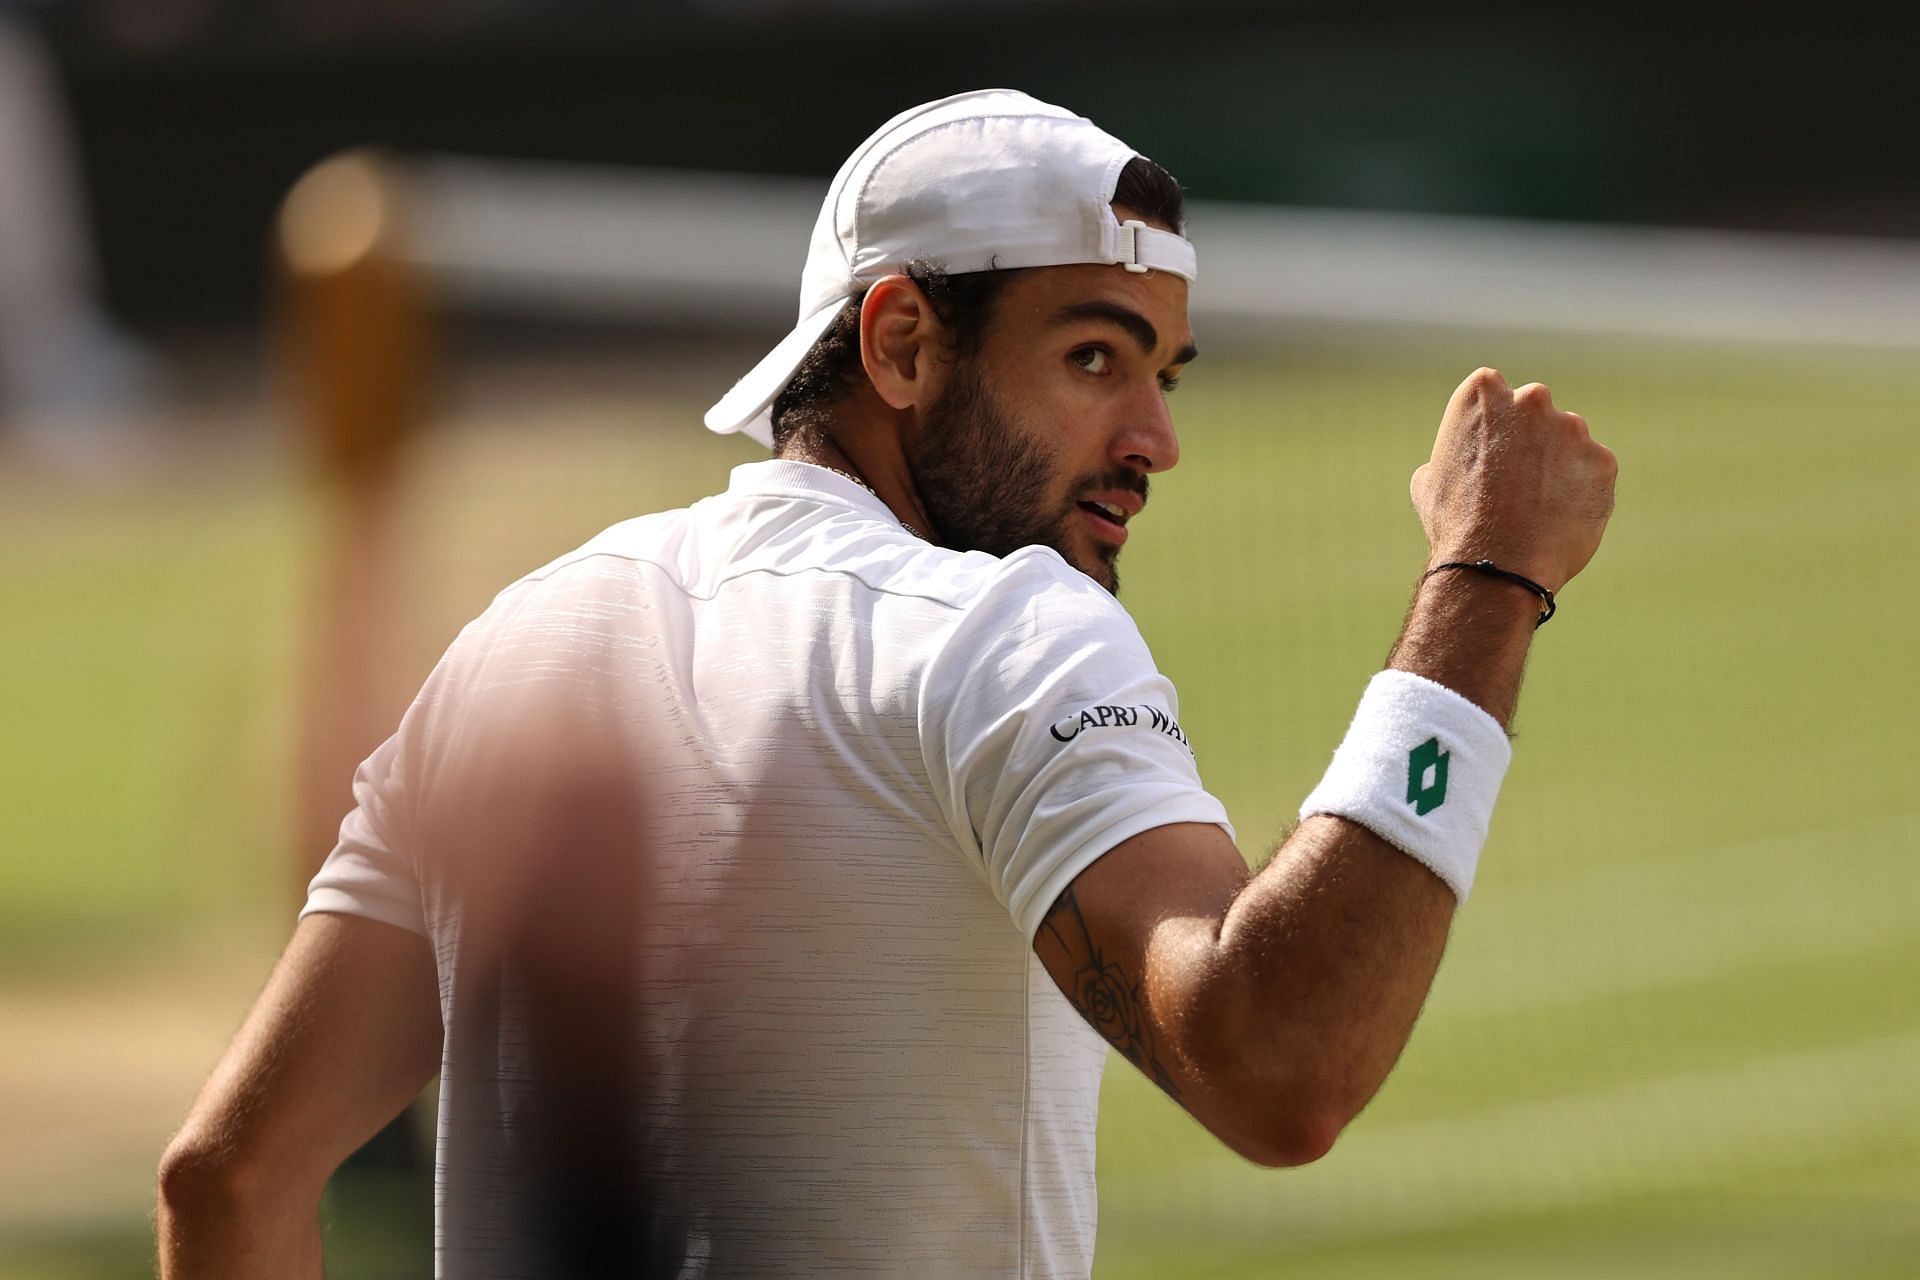 Berrettini celebrates a point against Djokovic at the Wimbledon final